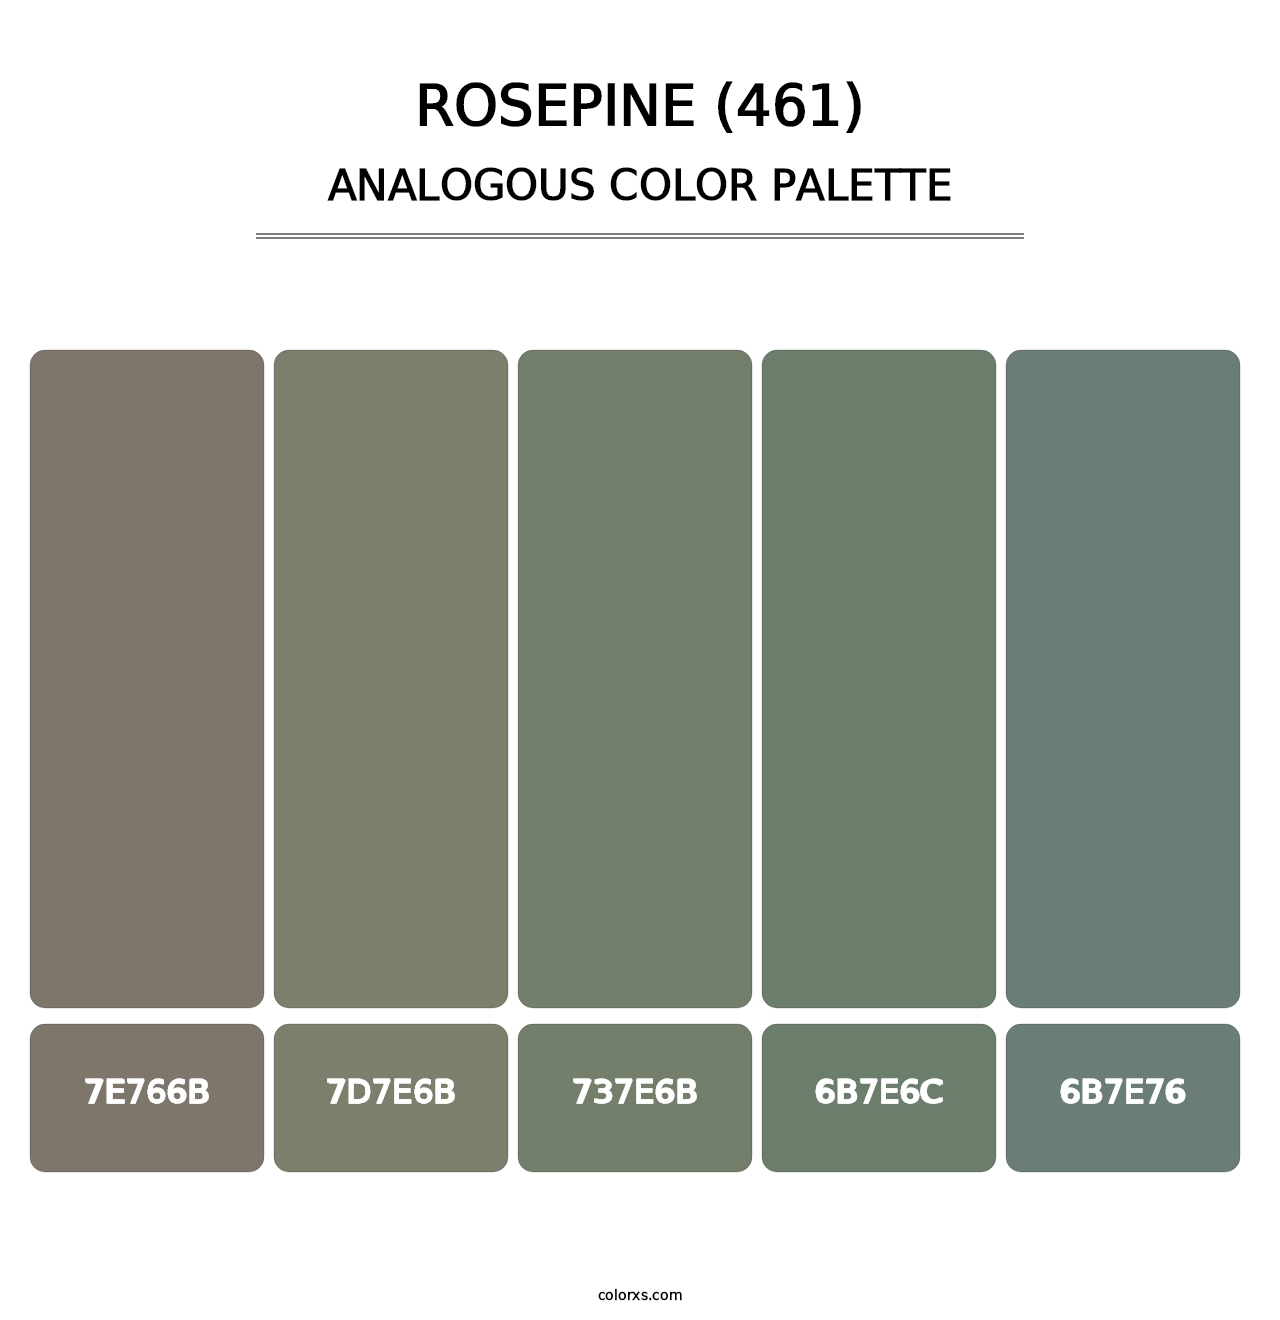 Rosepine (461) - Analogous Color Palette